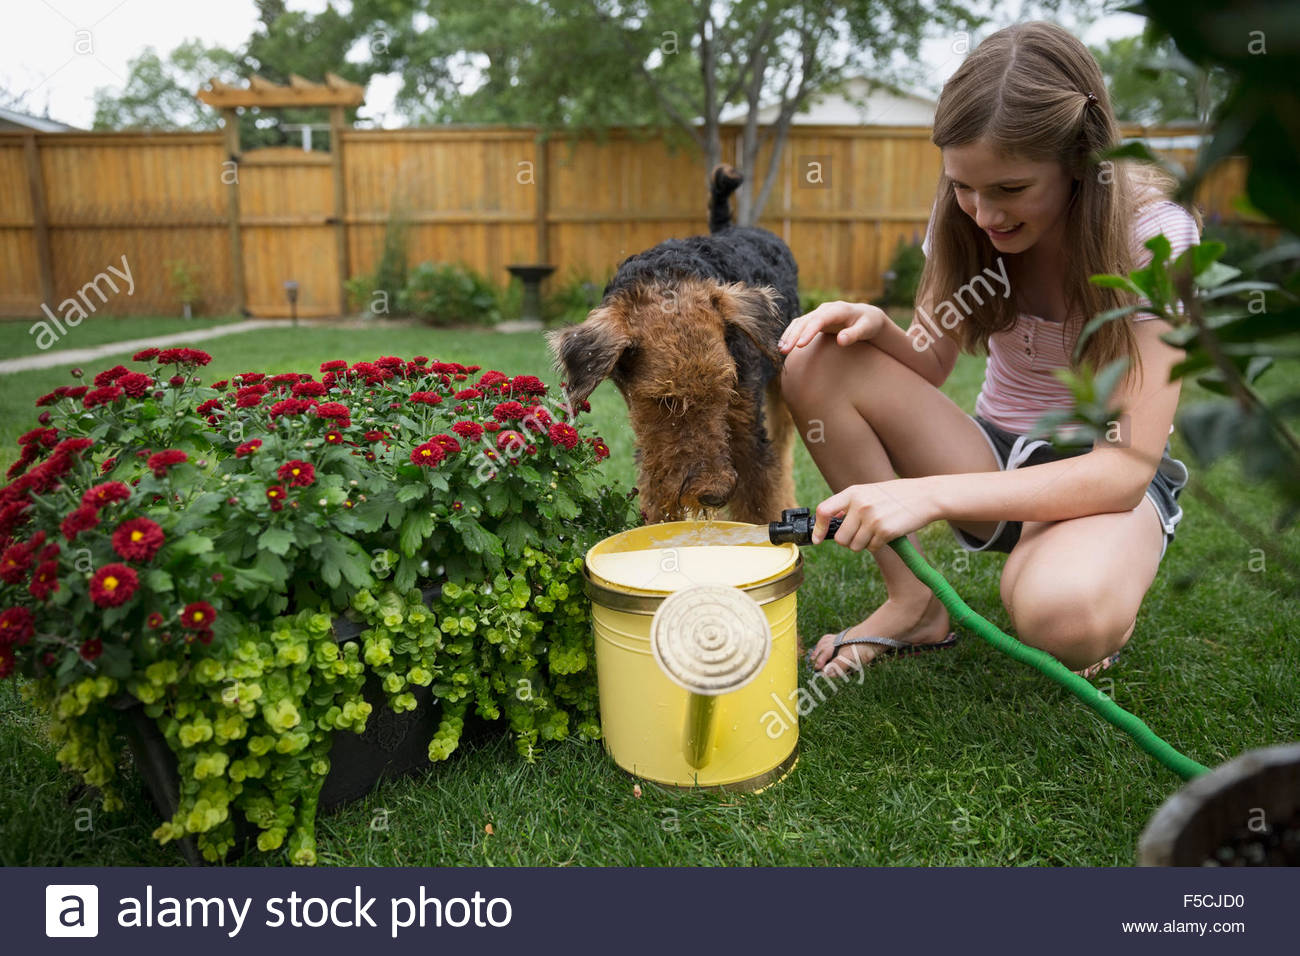 Dog watching girl filling watering can in backyard Stock Photo